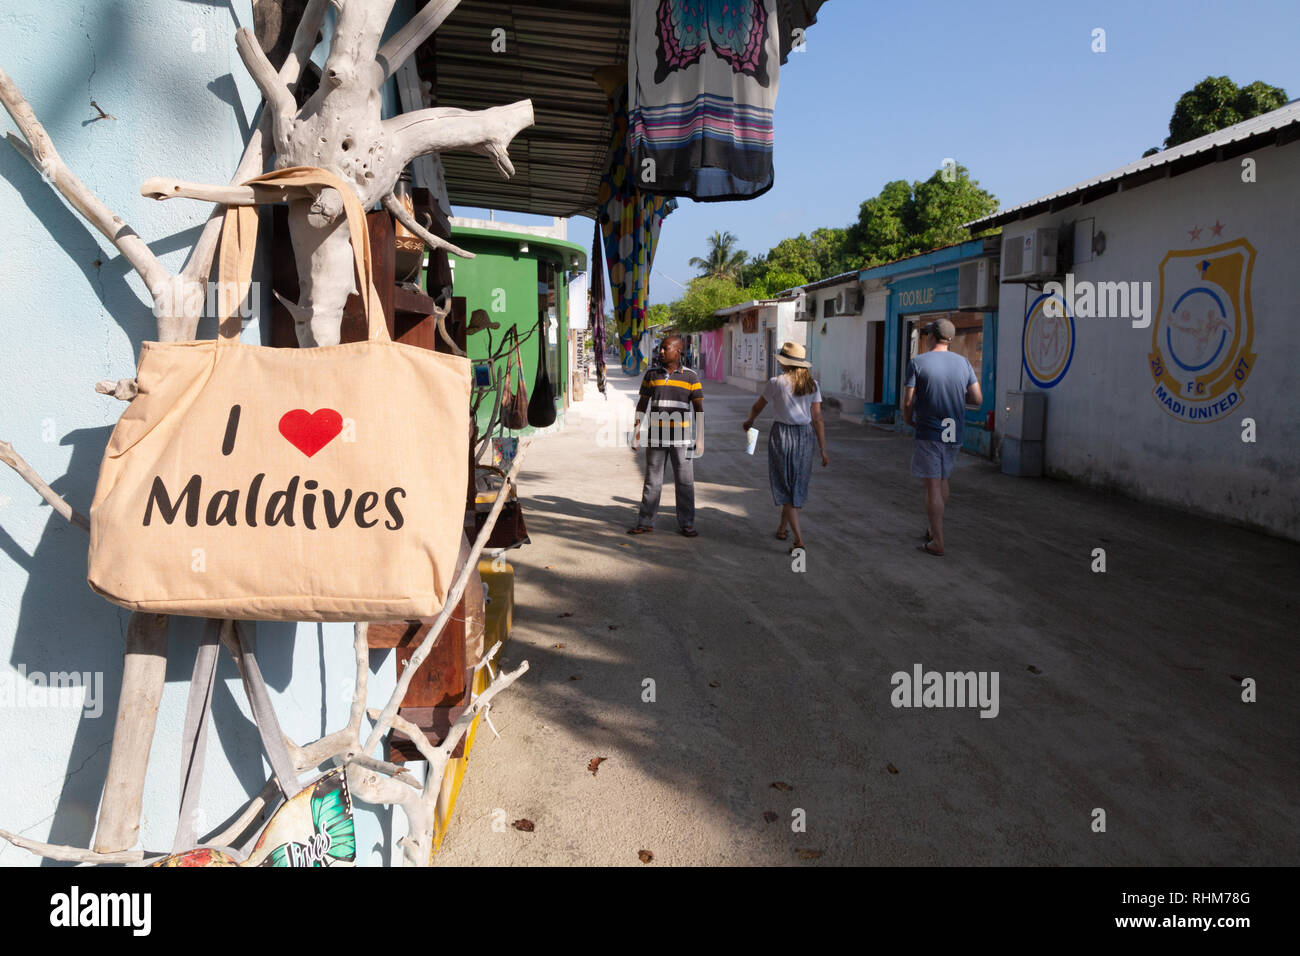 Malediven Tourismus - Straßenszene, Einheimischen und Touristen, Insel Rasdhoo, Rasdhoo Atoll, Malediven, Asien Stockfoto